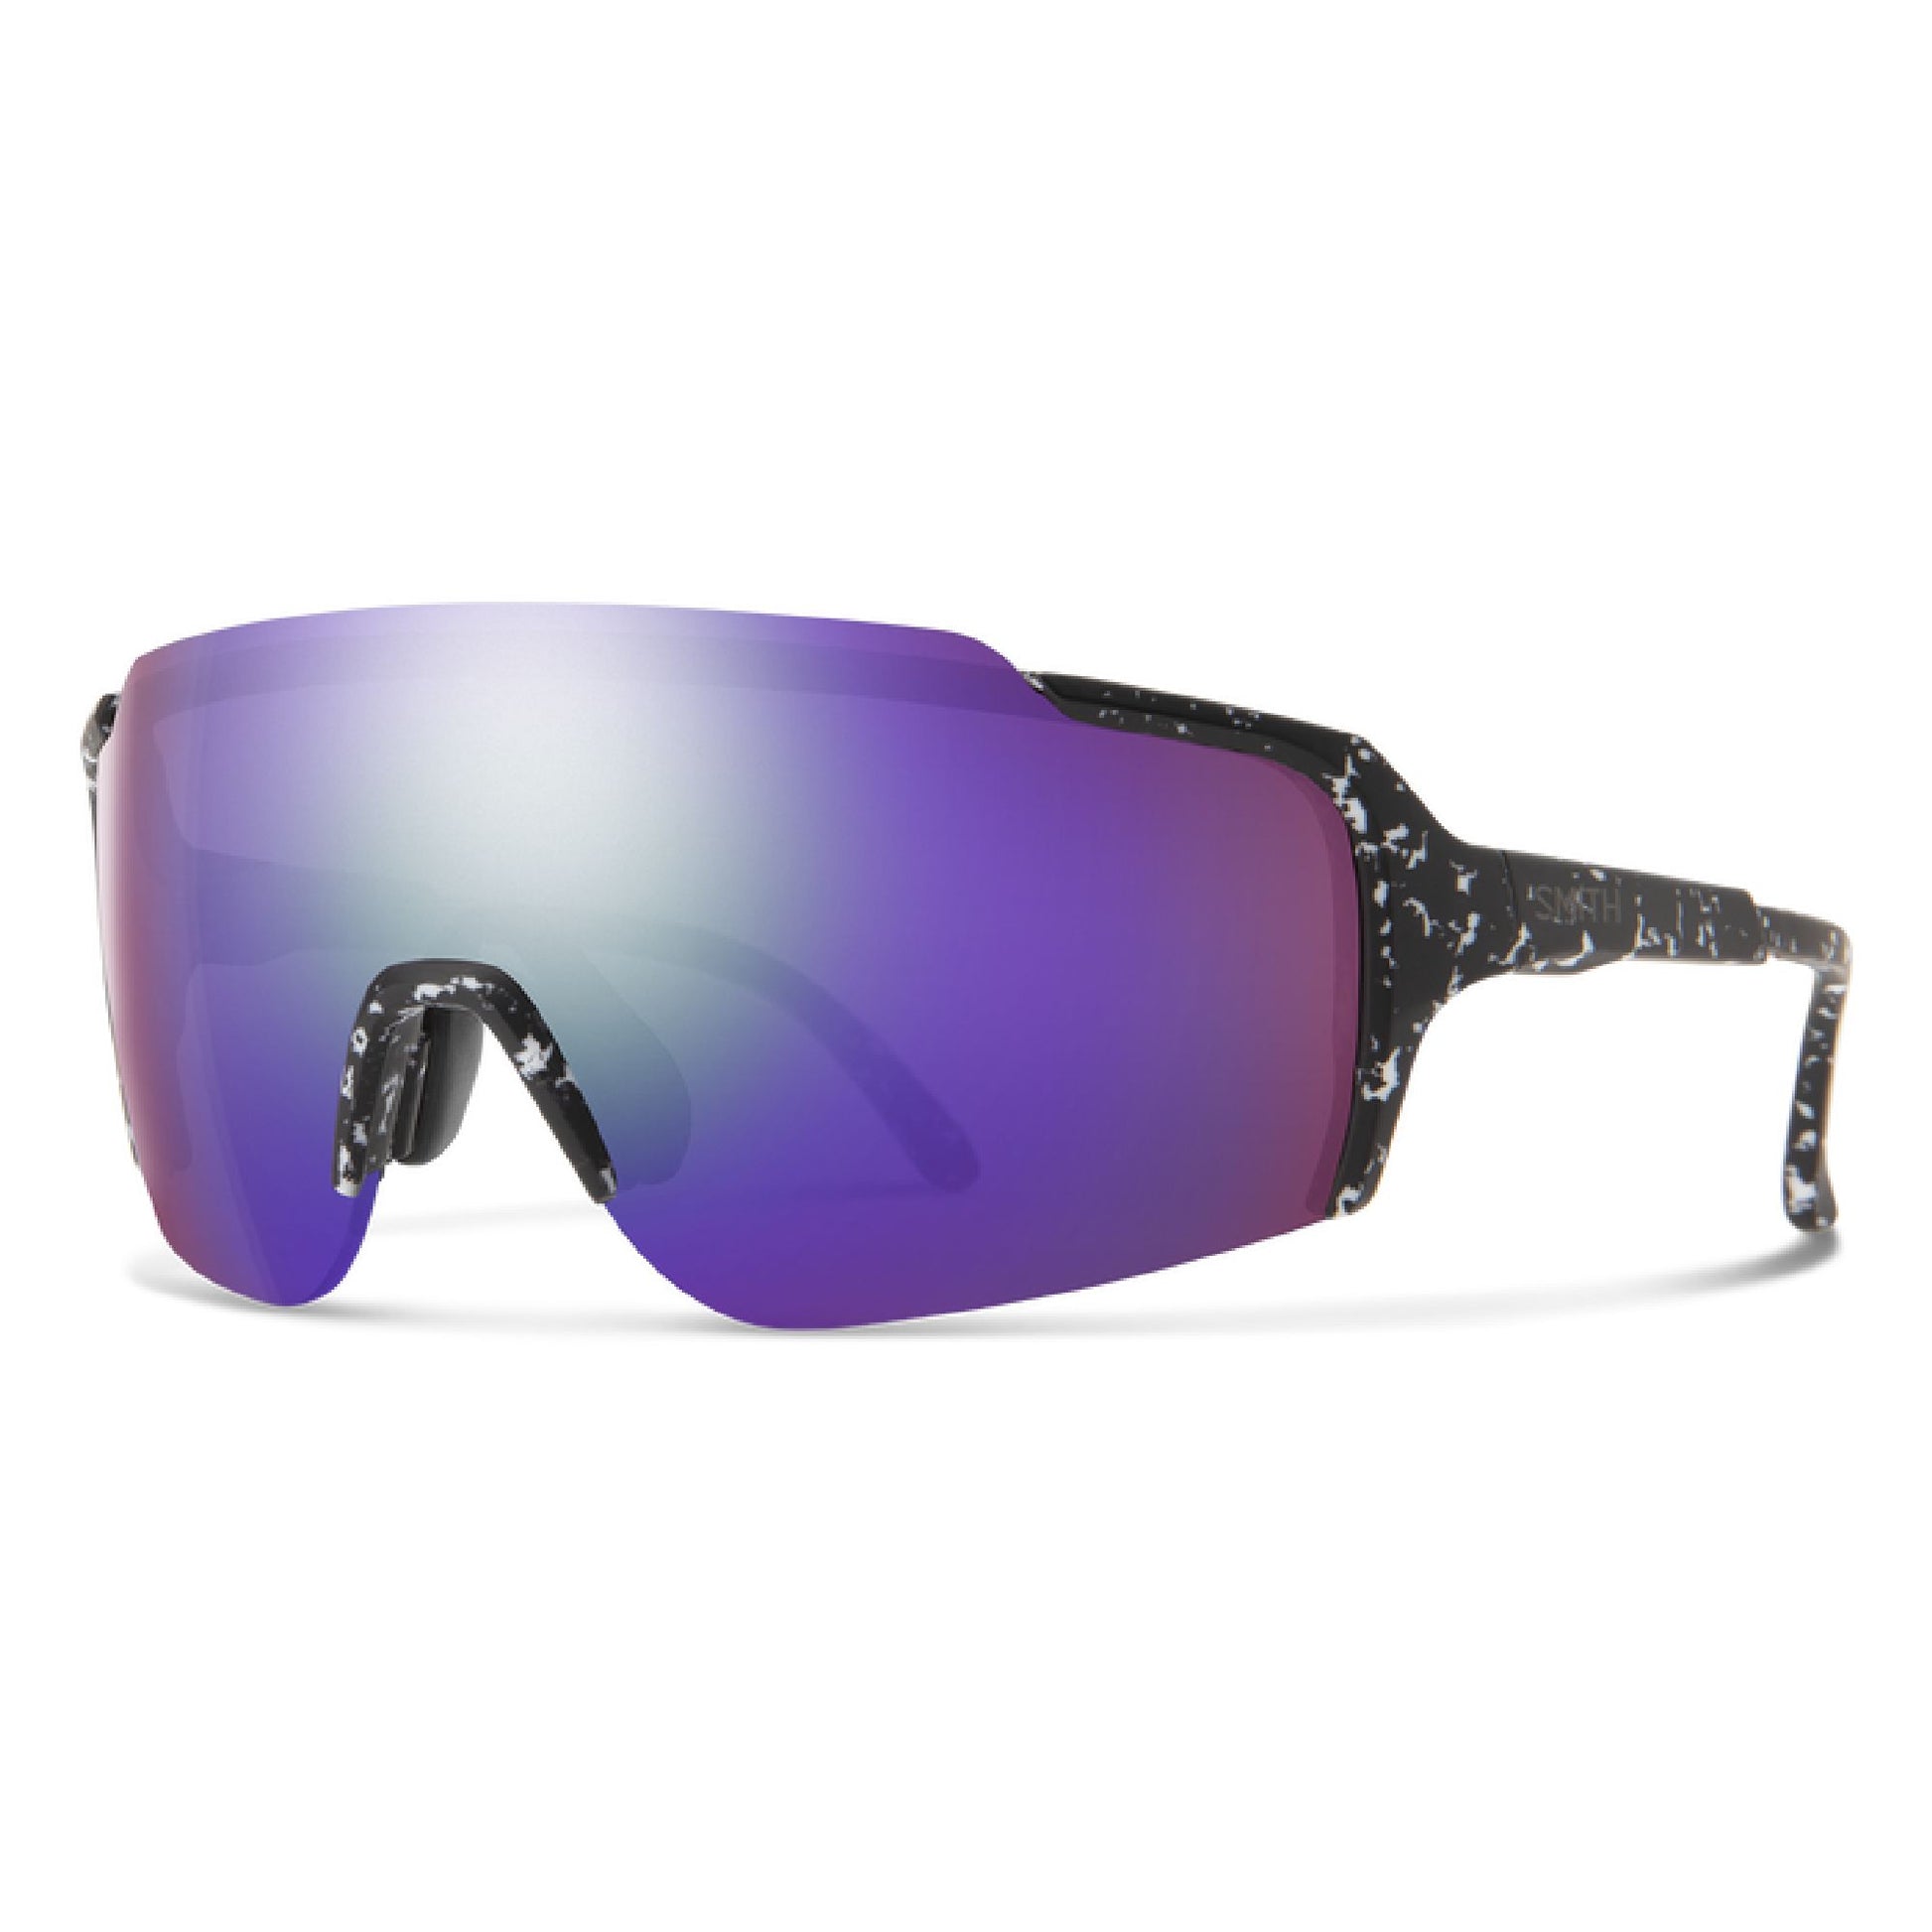 Smith Optics Lake Shasta Sunglasses ChromaPop Polarized Violet